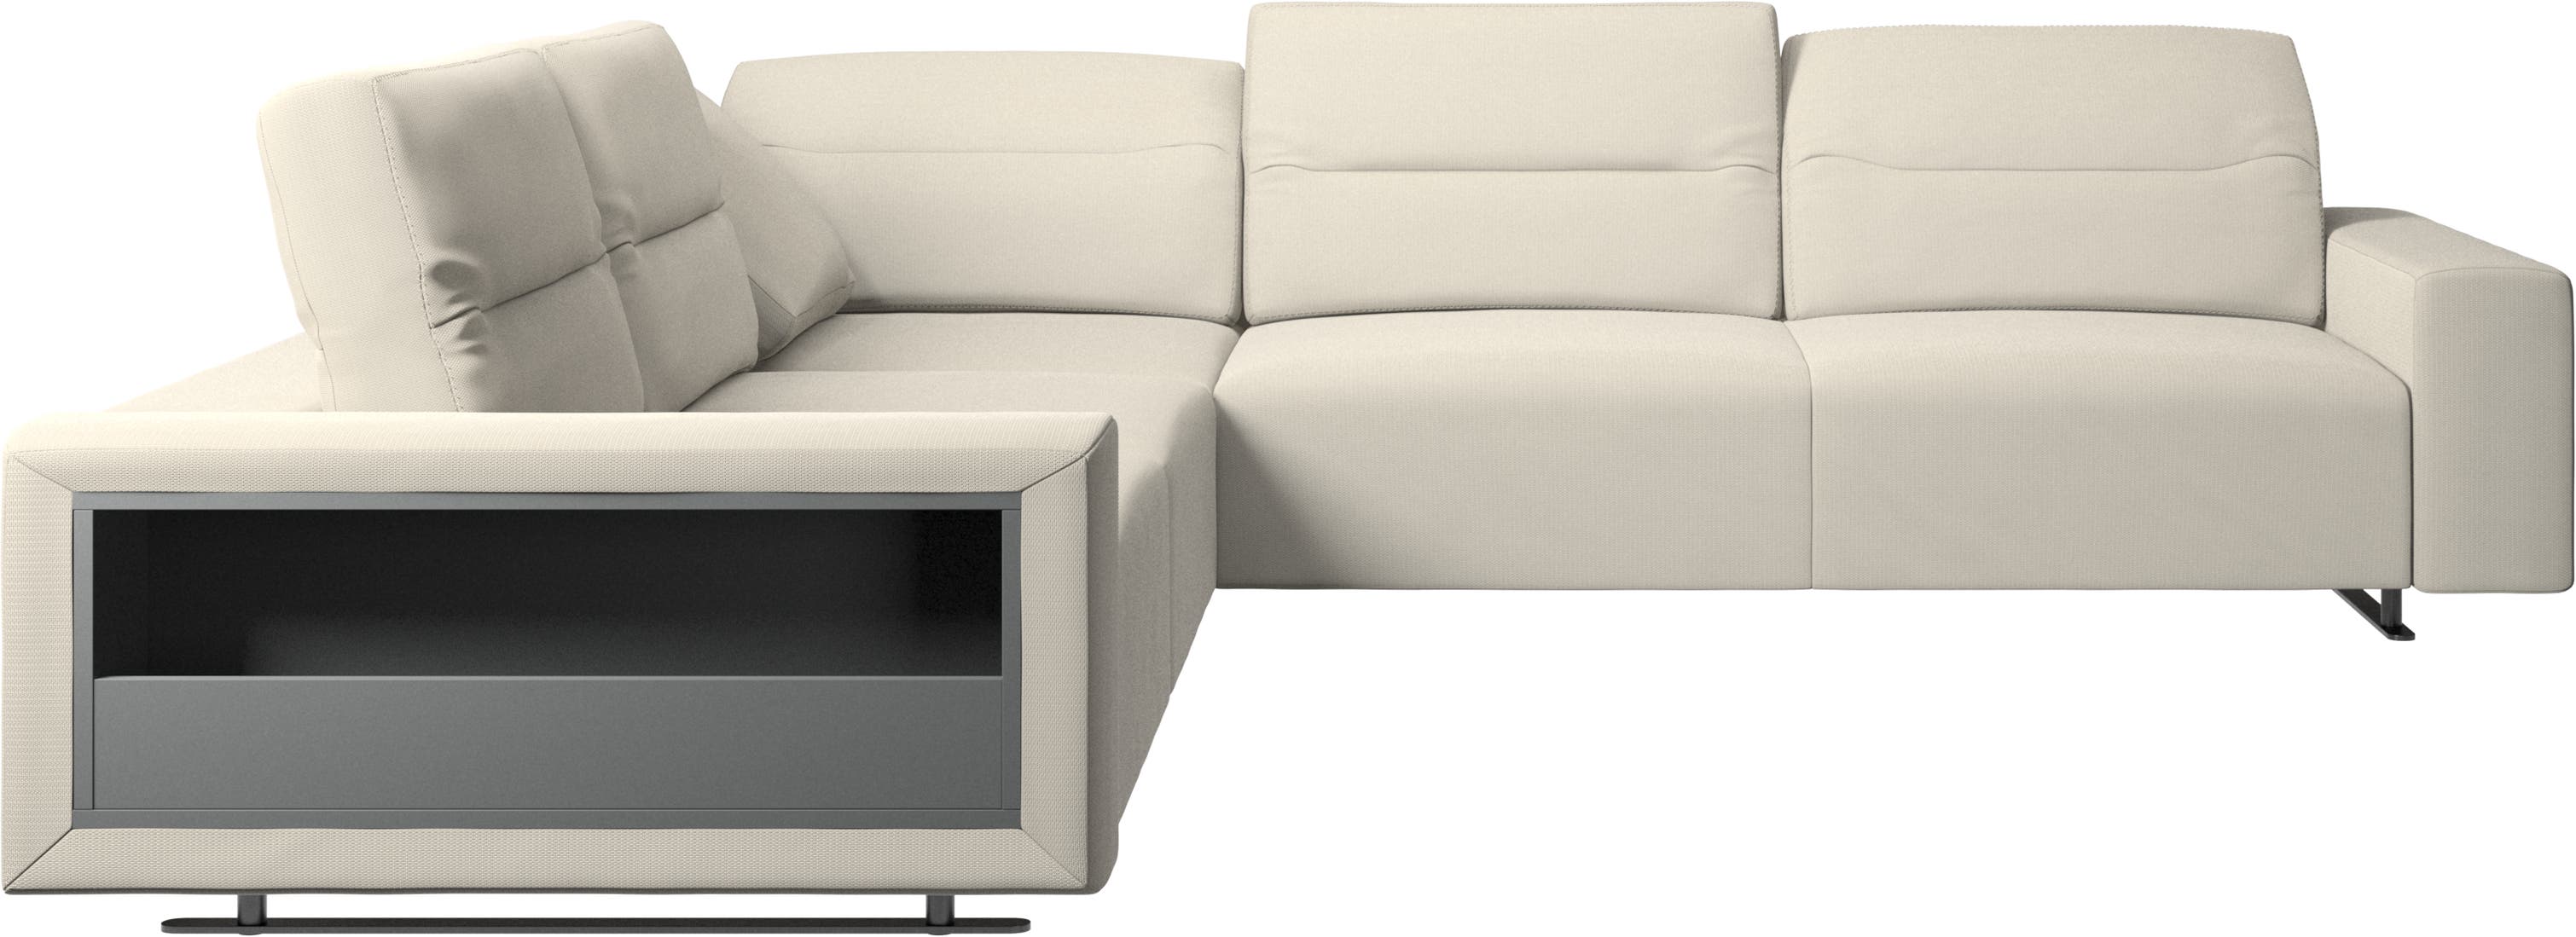 Hampton corner sofa with adjustable back and storage